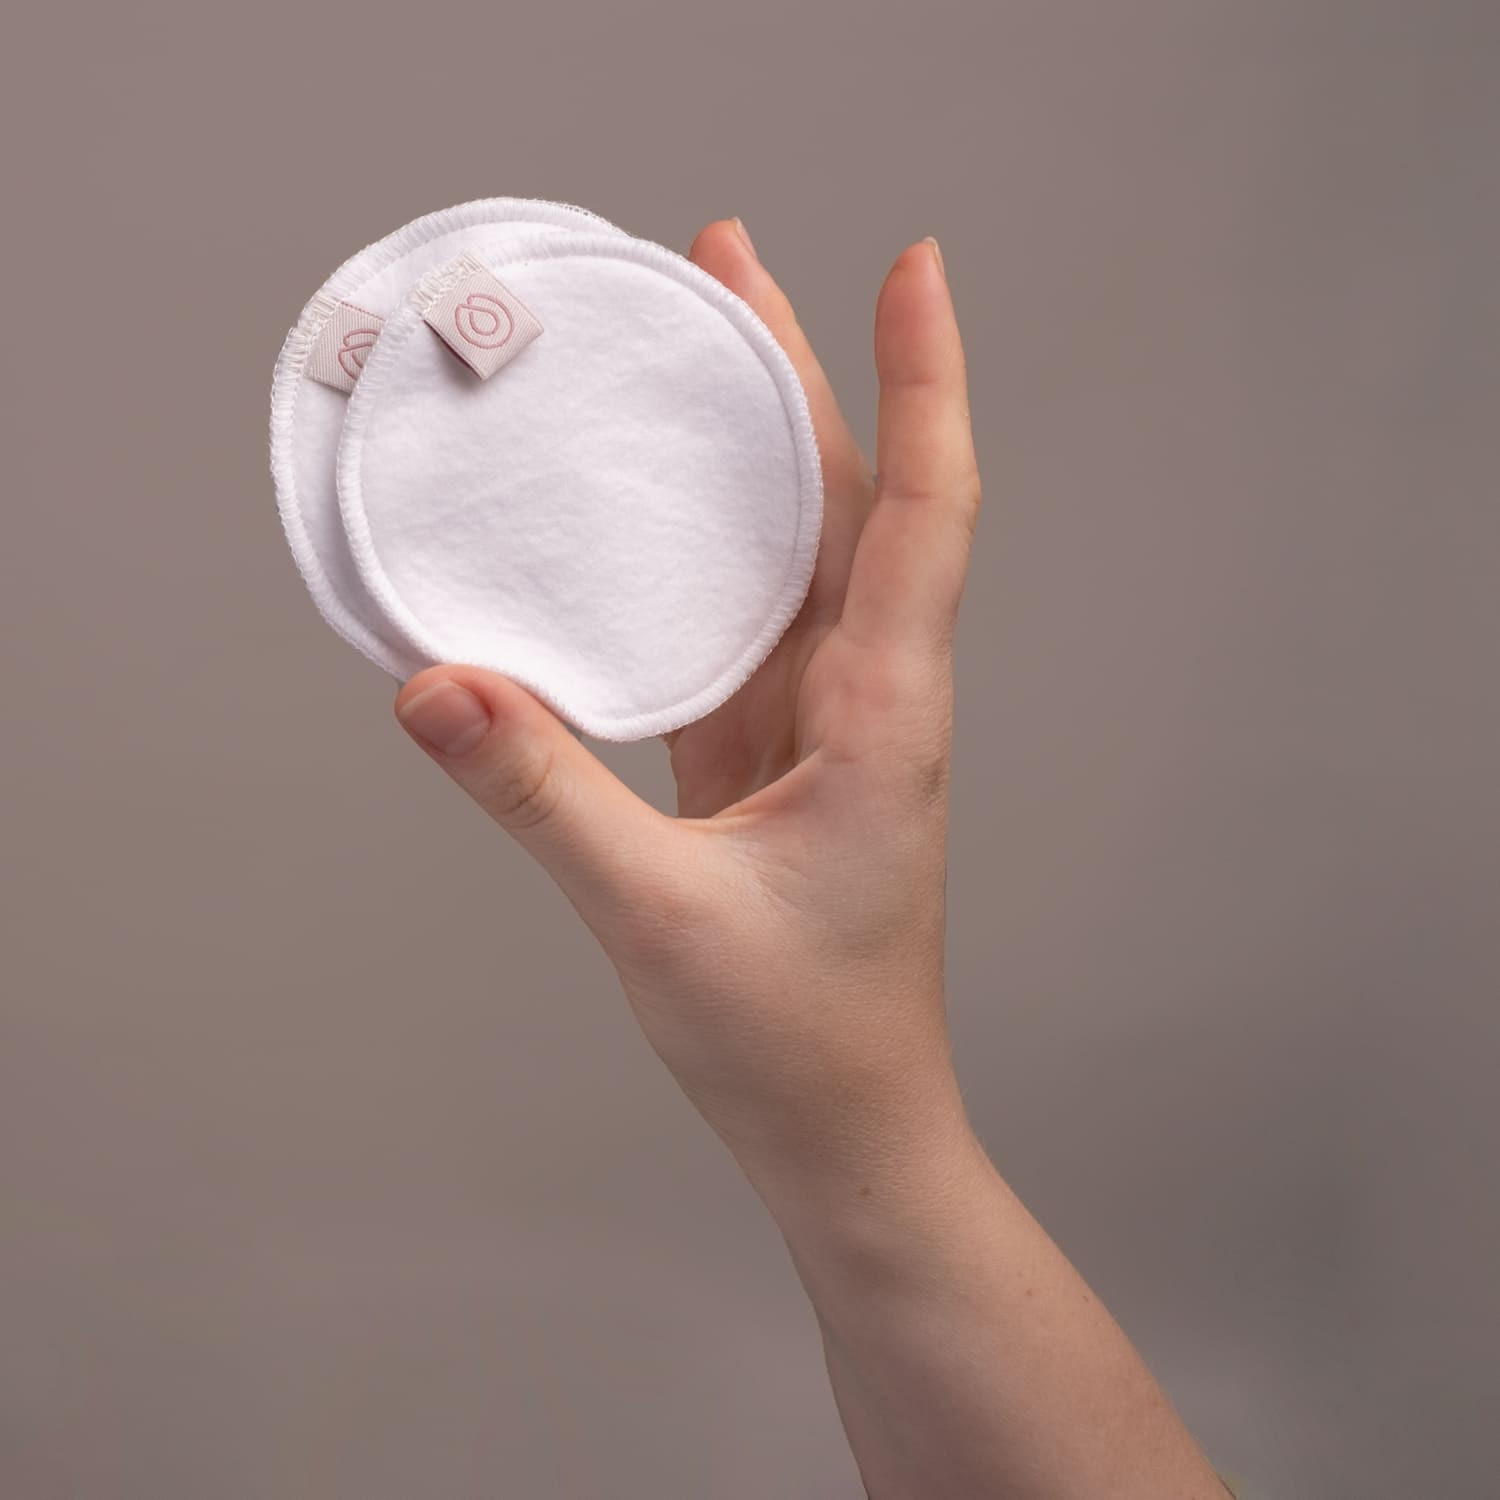 Reusable make-up pads